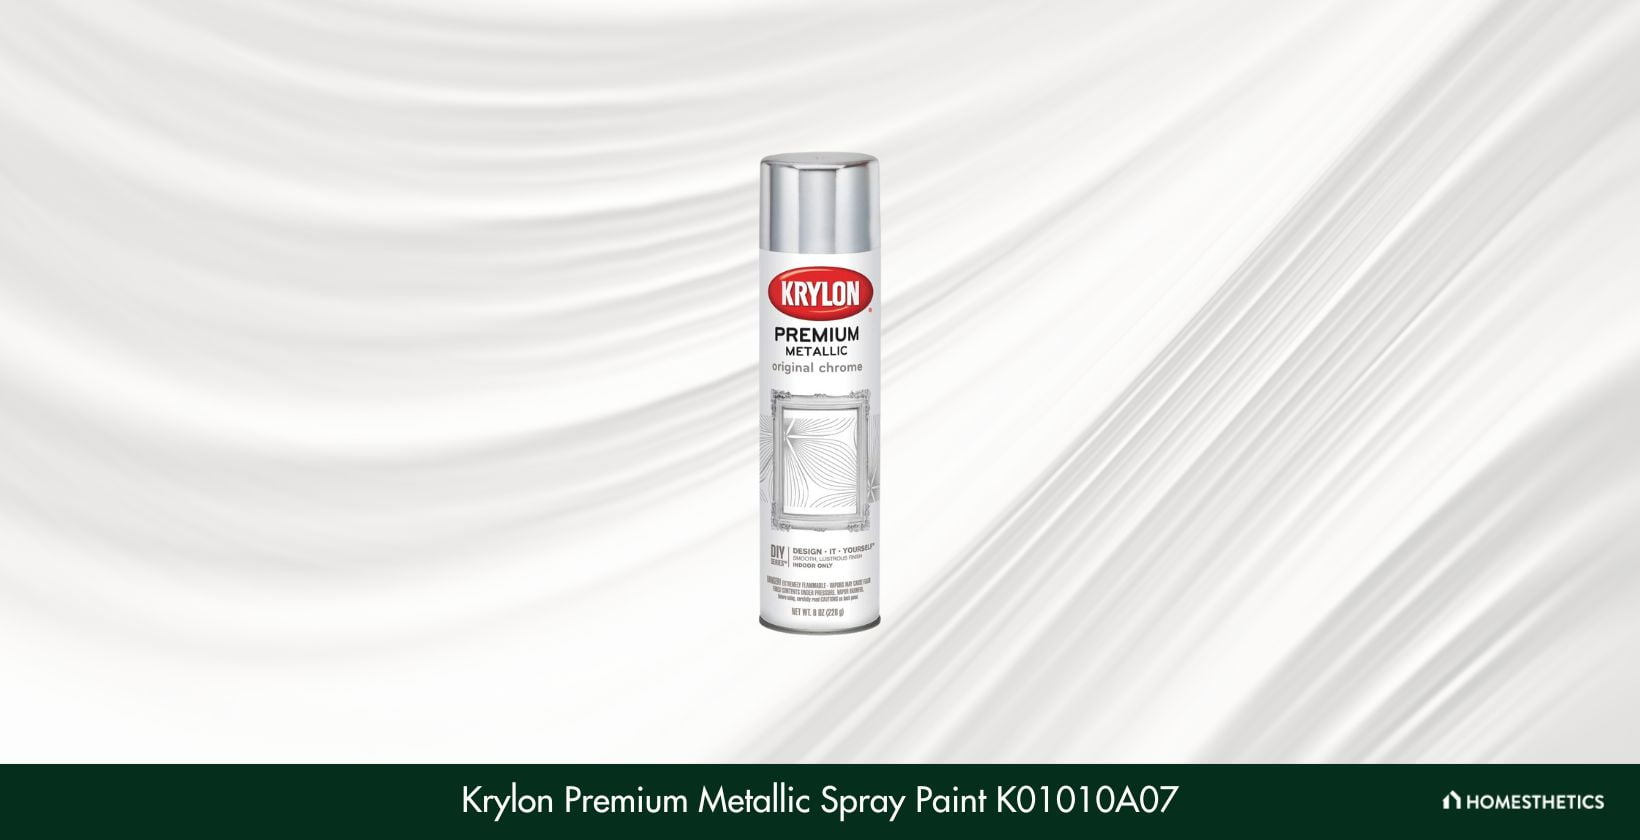 Krylon Premium Metallic Spray Paint K01010A07